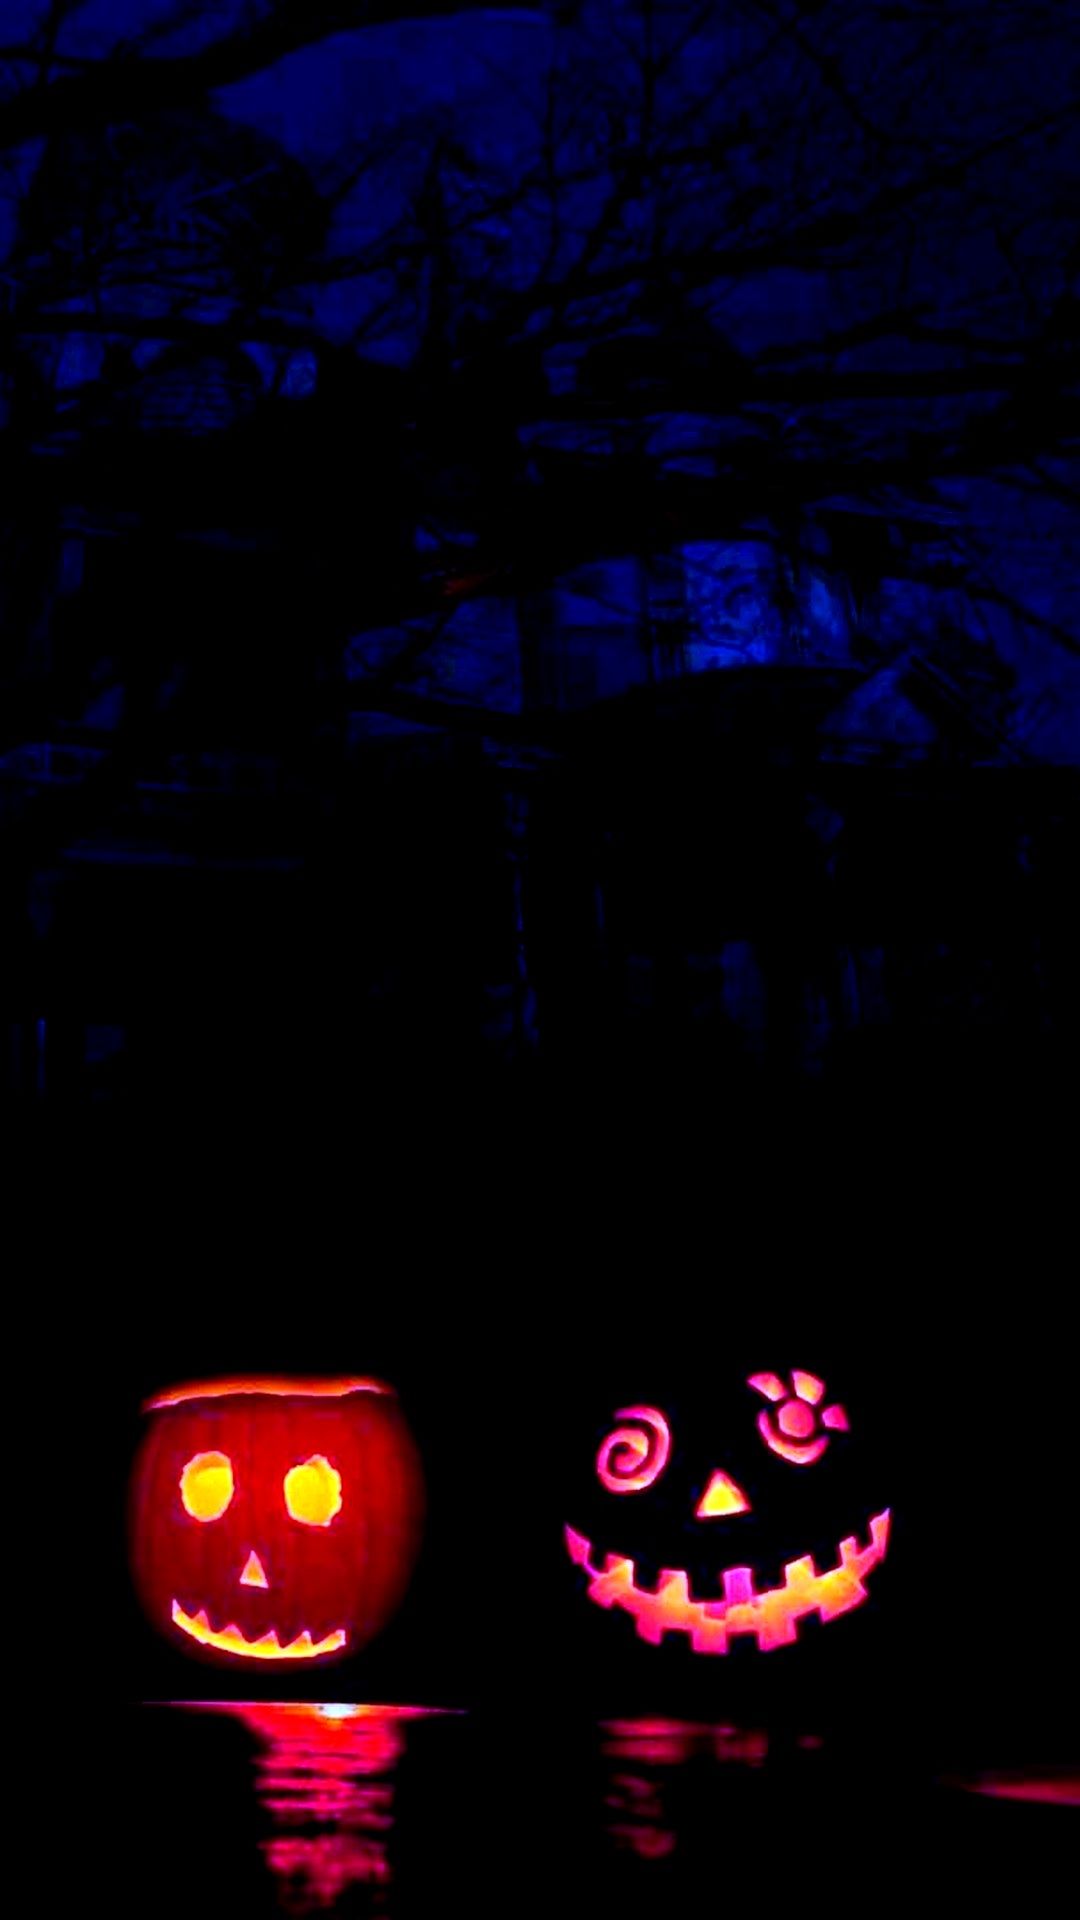 Two pumpkins sitting on a dark street - Cute Halloween